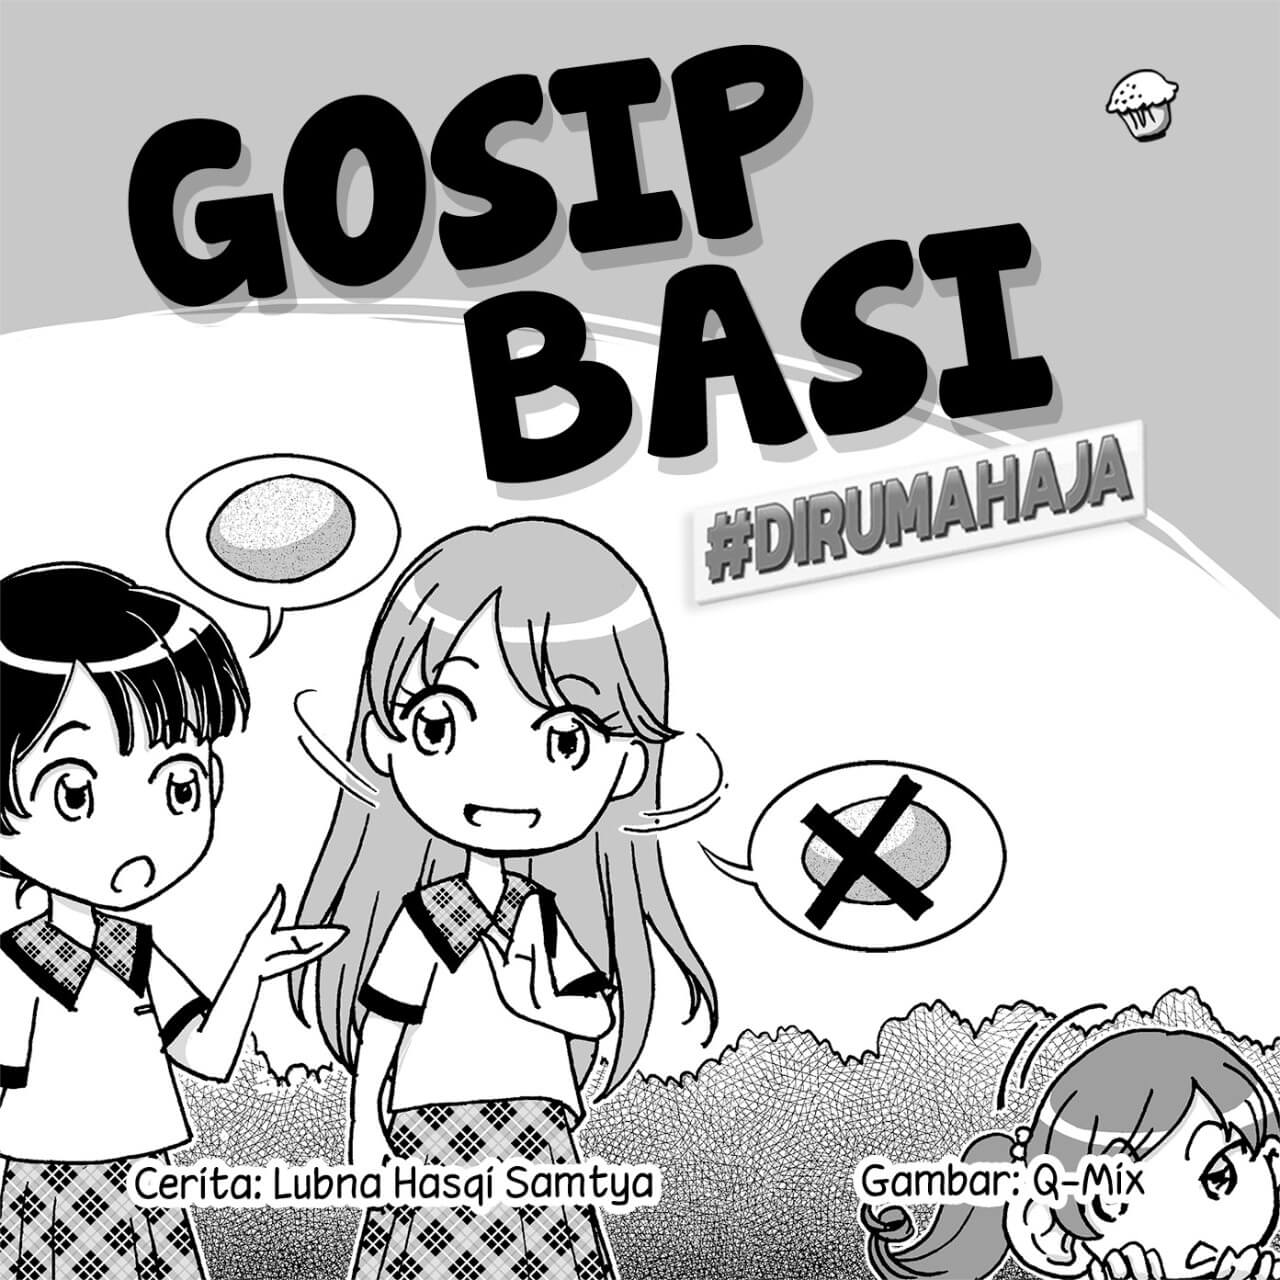 Gosip Basi Cover bw